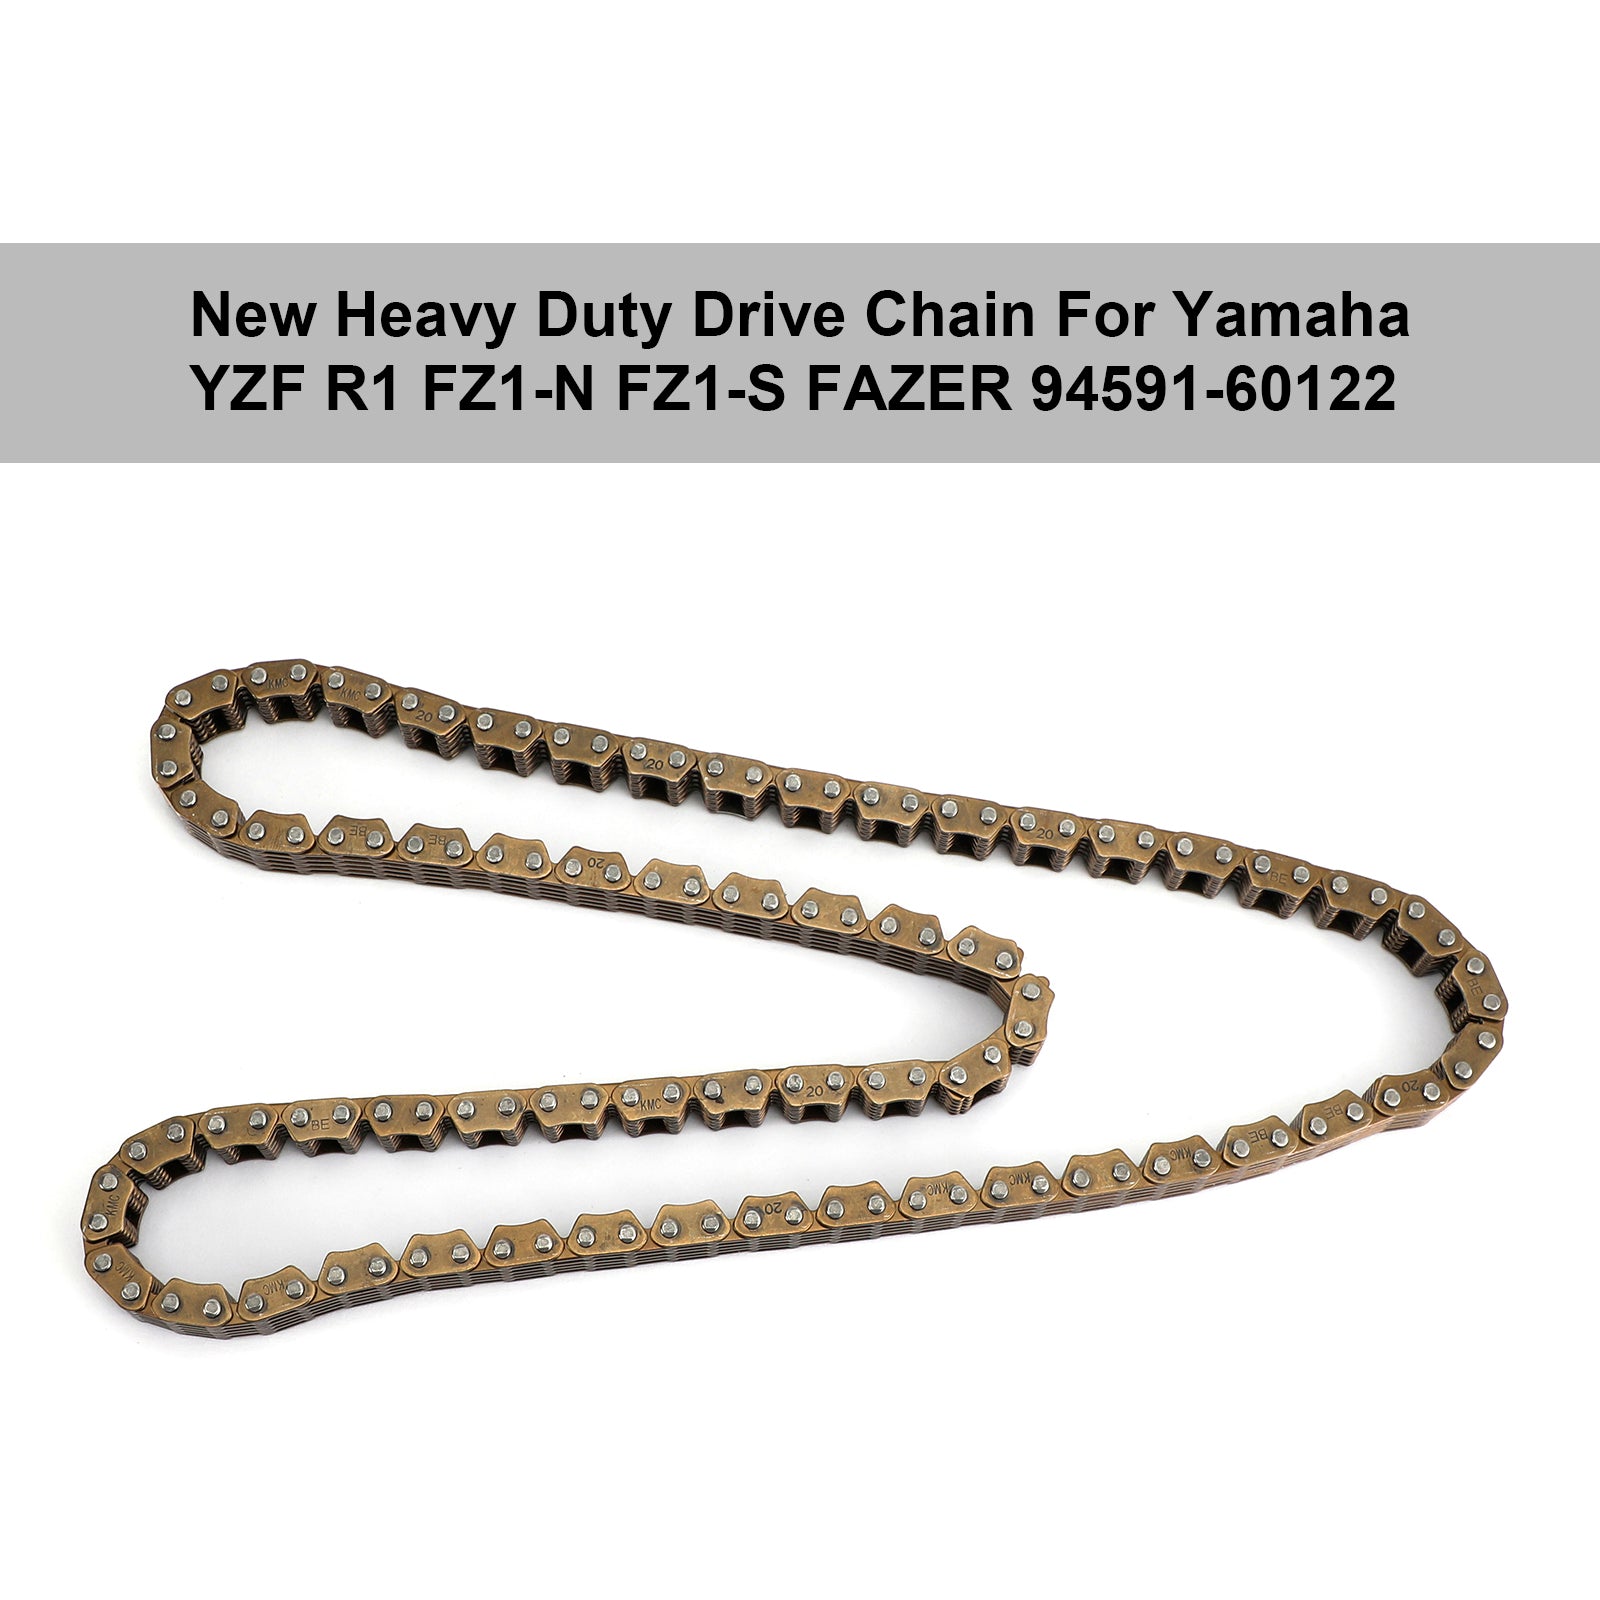 New Heavy Duty Drive Chain For Yamaha Yzf R1 Fz1-N Fz1-S Fazer 94591-60122 Generic